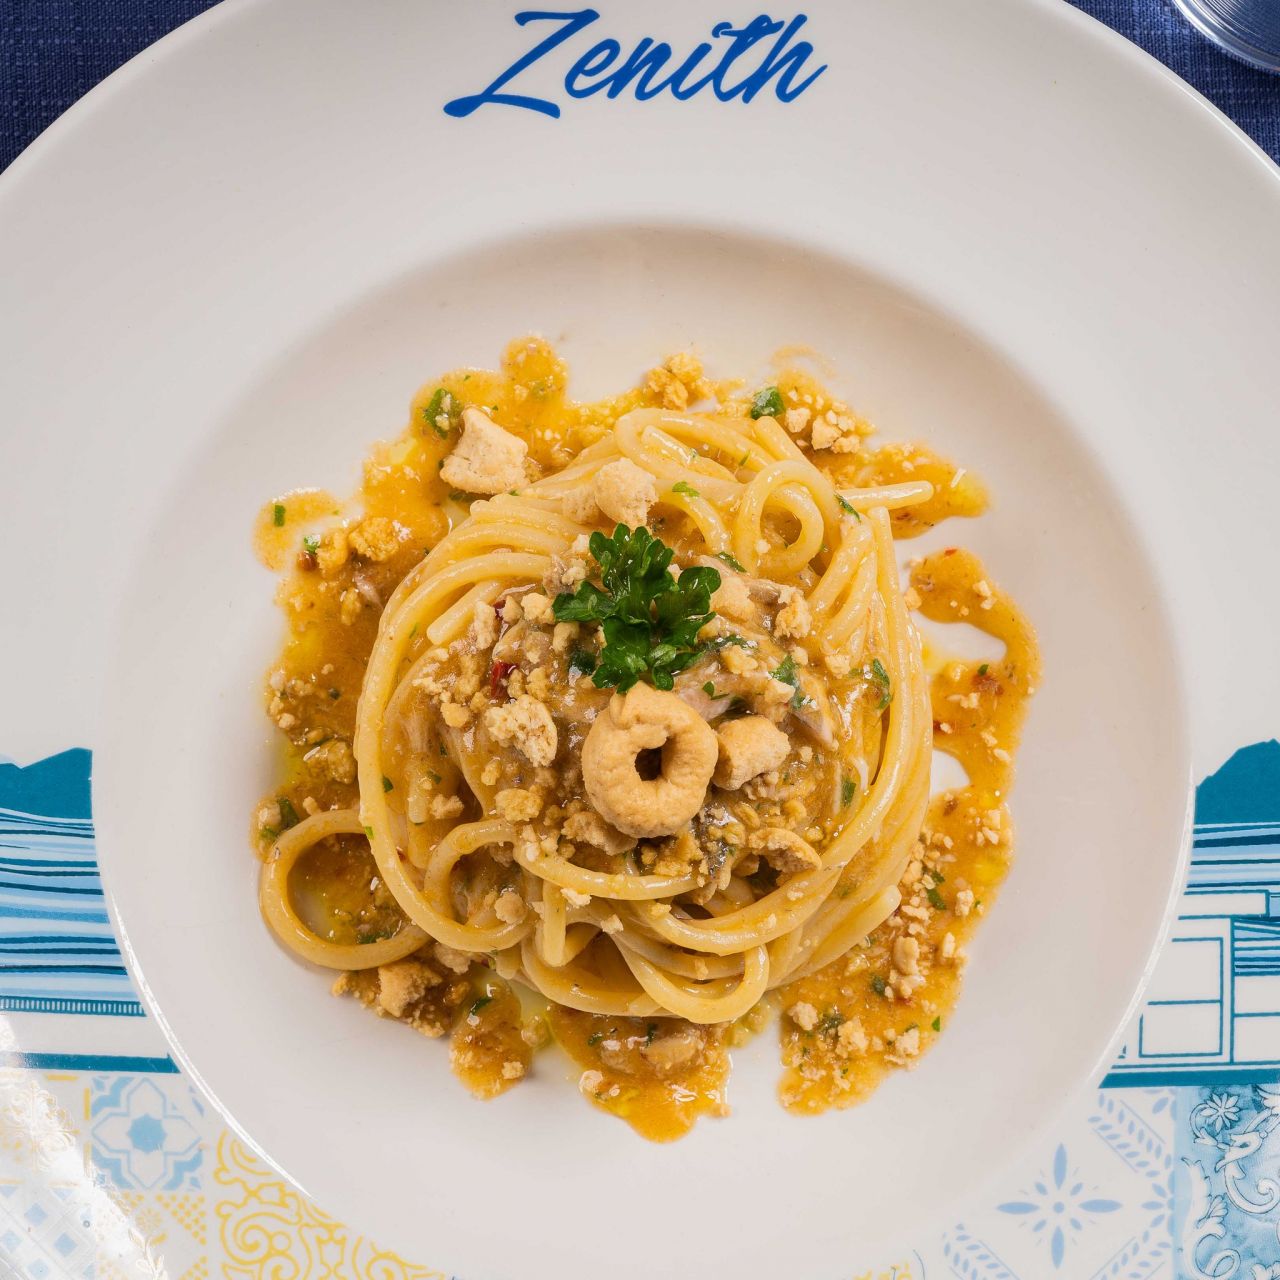 Zenith Cafè & Restaurant